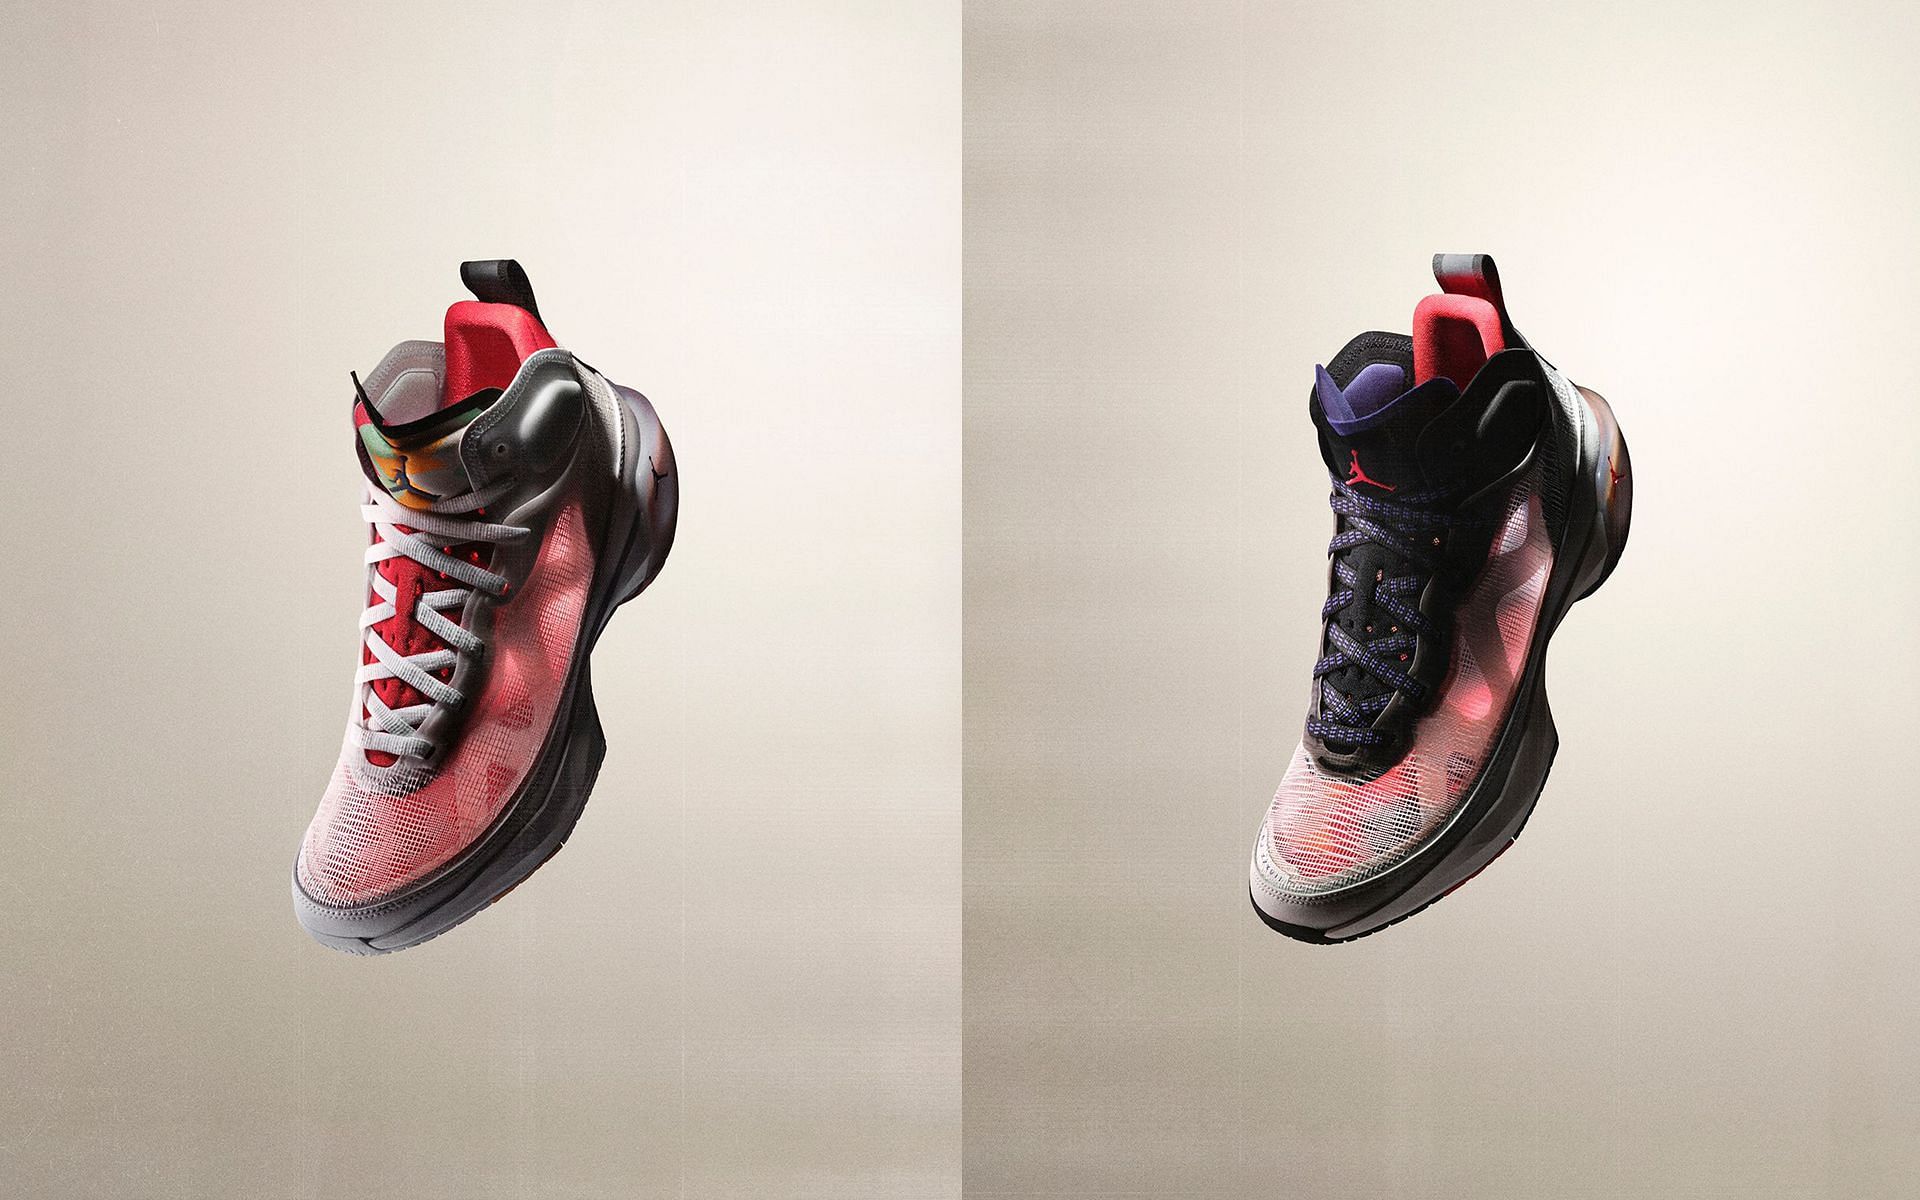 Air Jordan 37 shoes will be released in two colorways (Image via Nike)